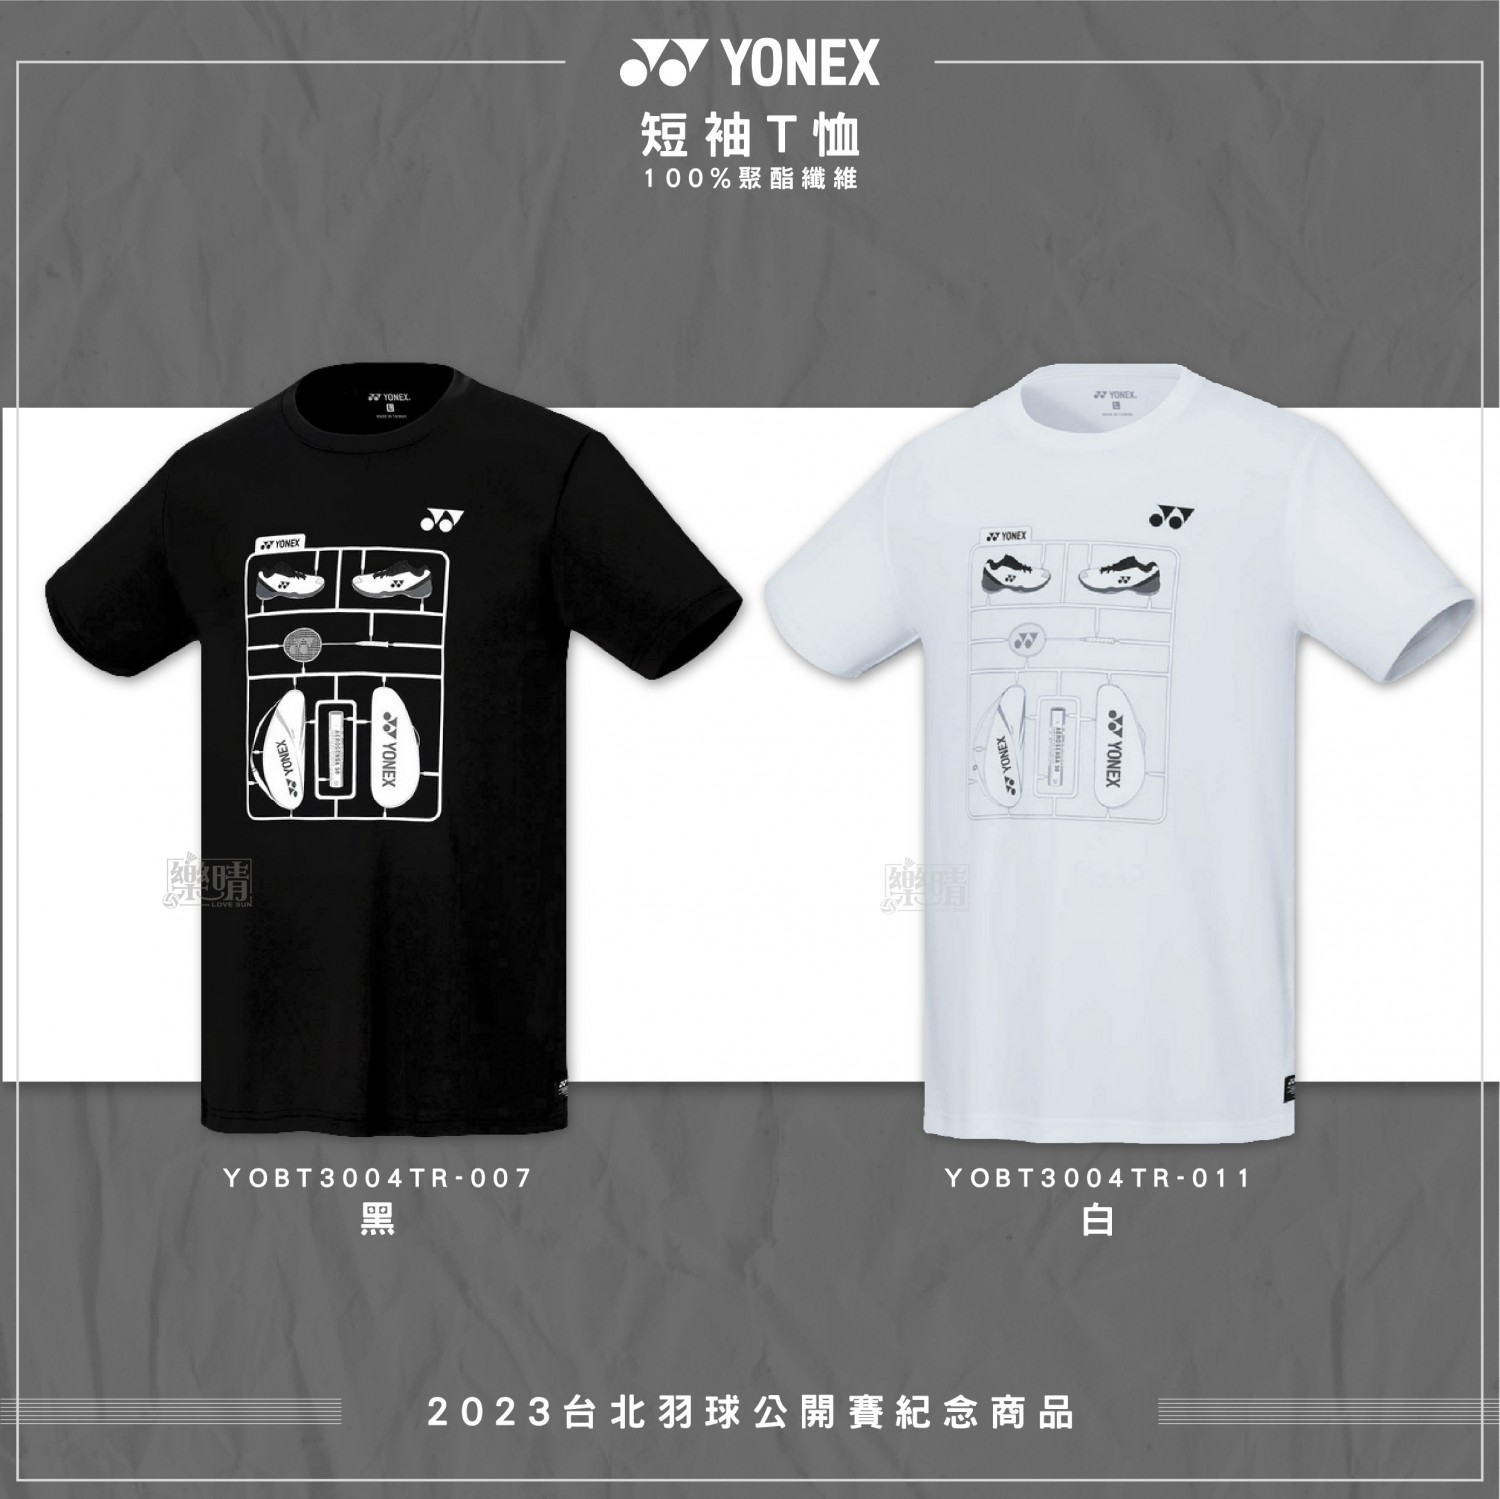 YONEX 短袖 YOBT3004TR